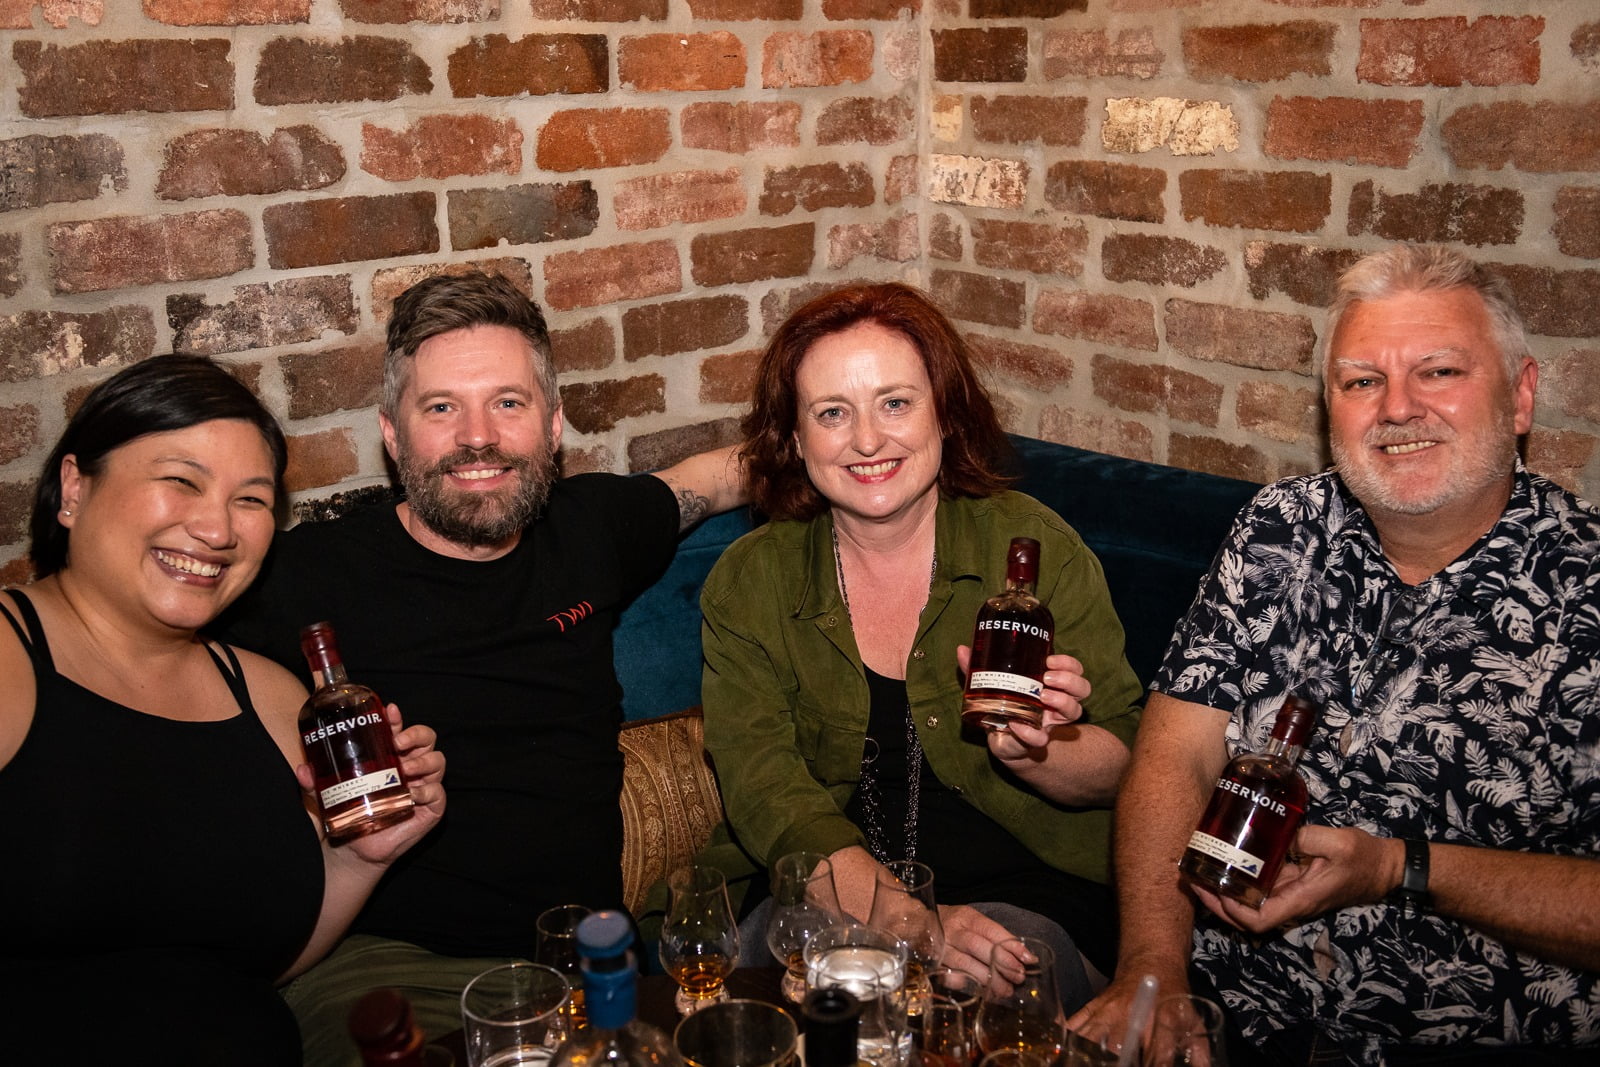 Happy group of whiskey aficionados smiling and holding up mini bottles of Reservoir whiskey